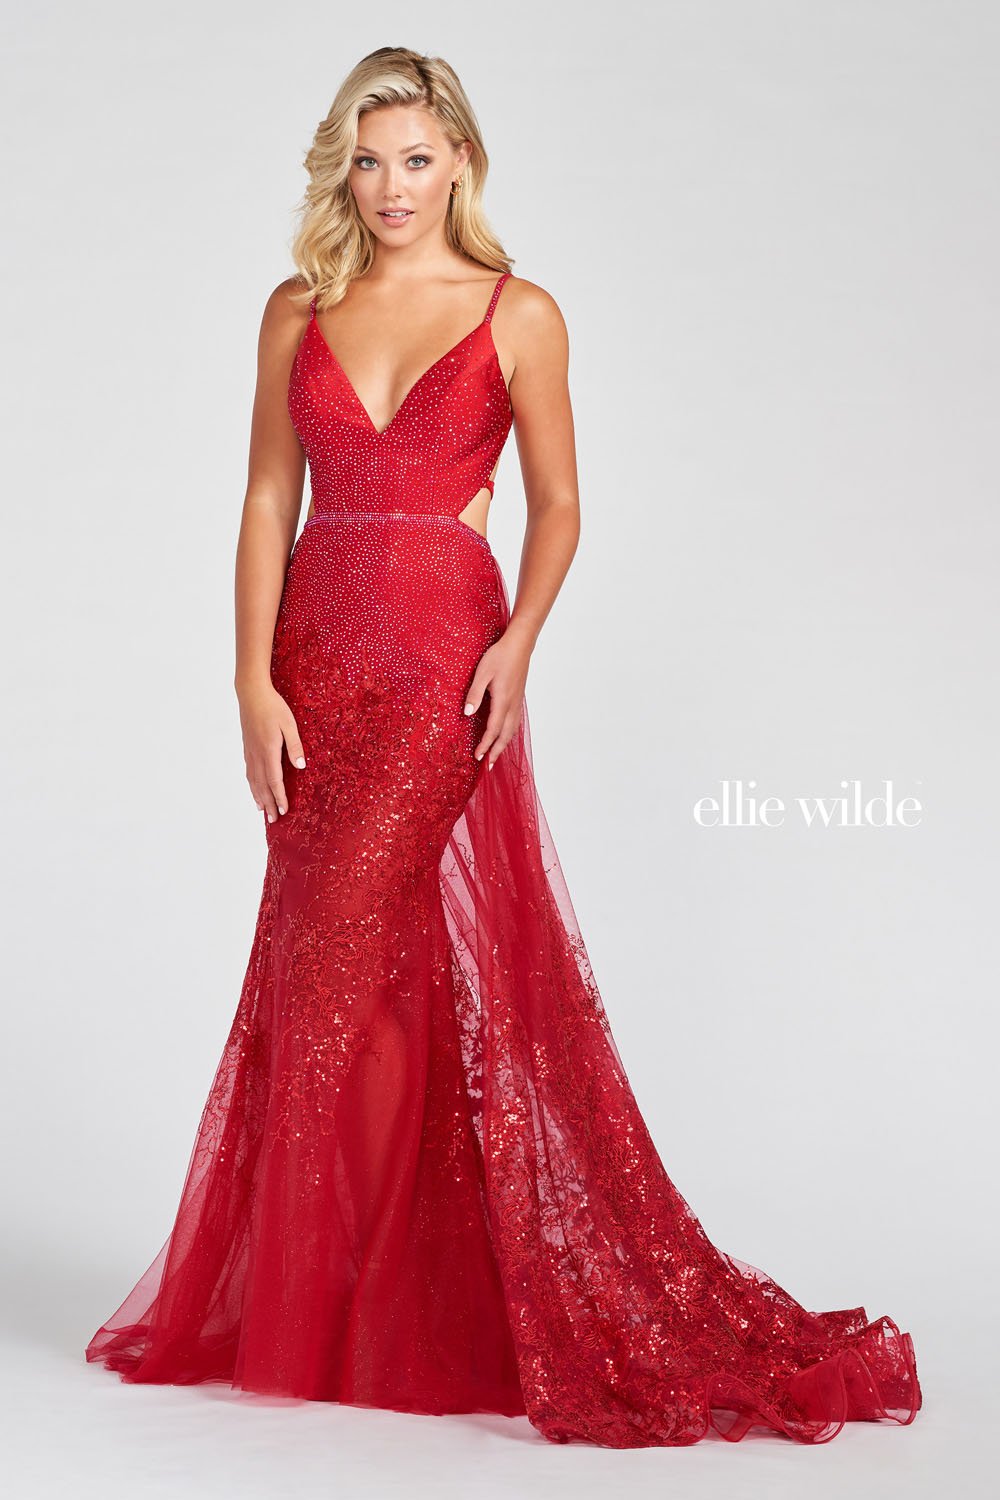 Ellie Wilde Ruby EW122023 Prom Dress Image.  Ruby formal dress.